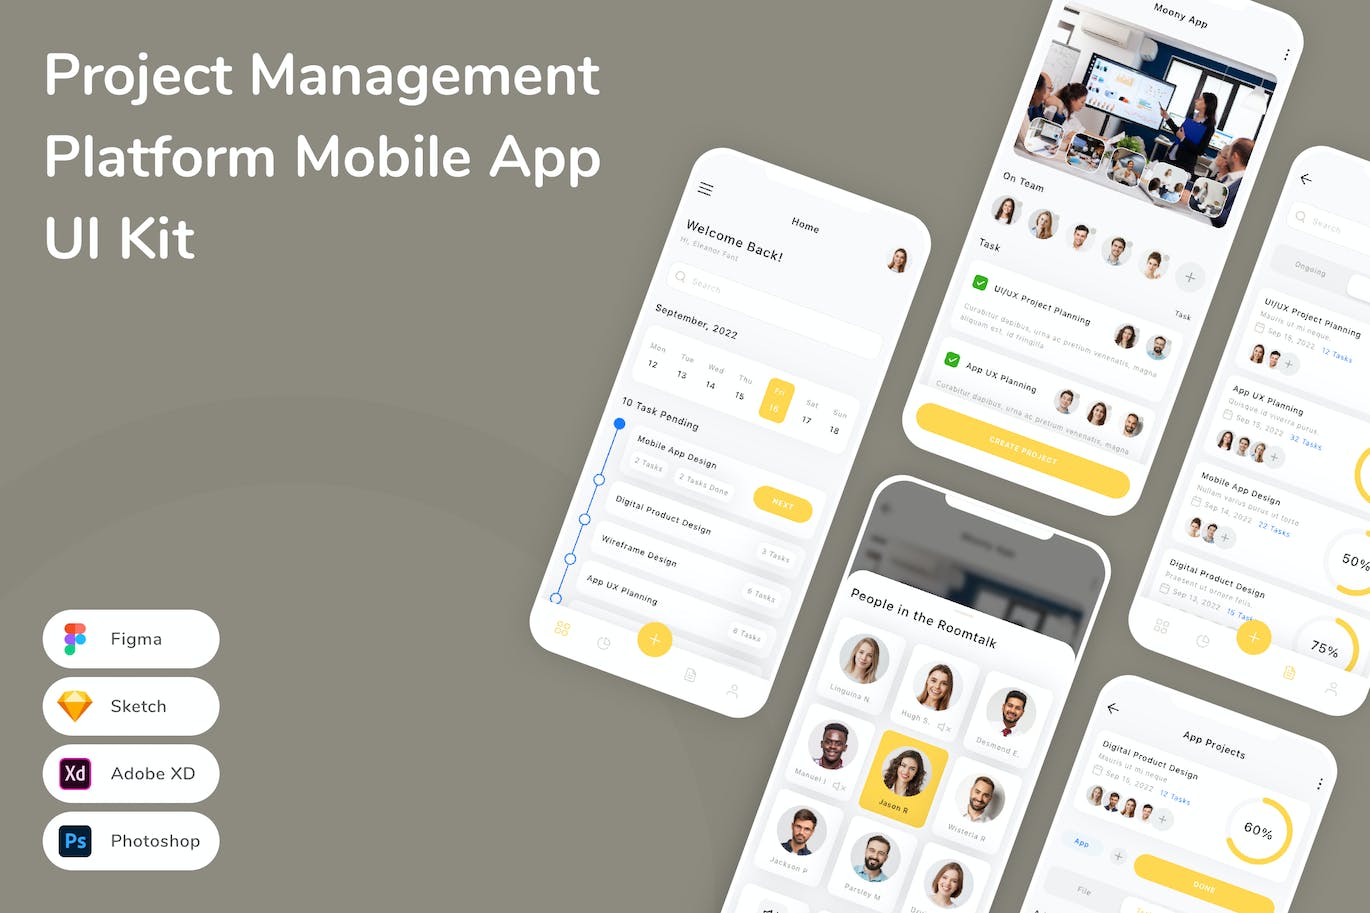 项目管理平台App手机应用程序UI设计素材 Project Management Platform Mobile App UI Kit APP UI 第1张